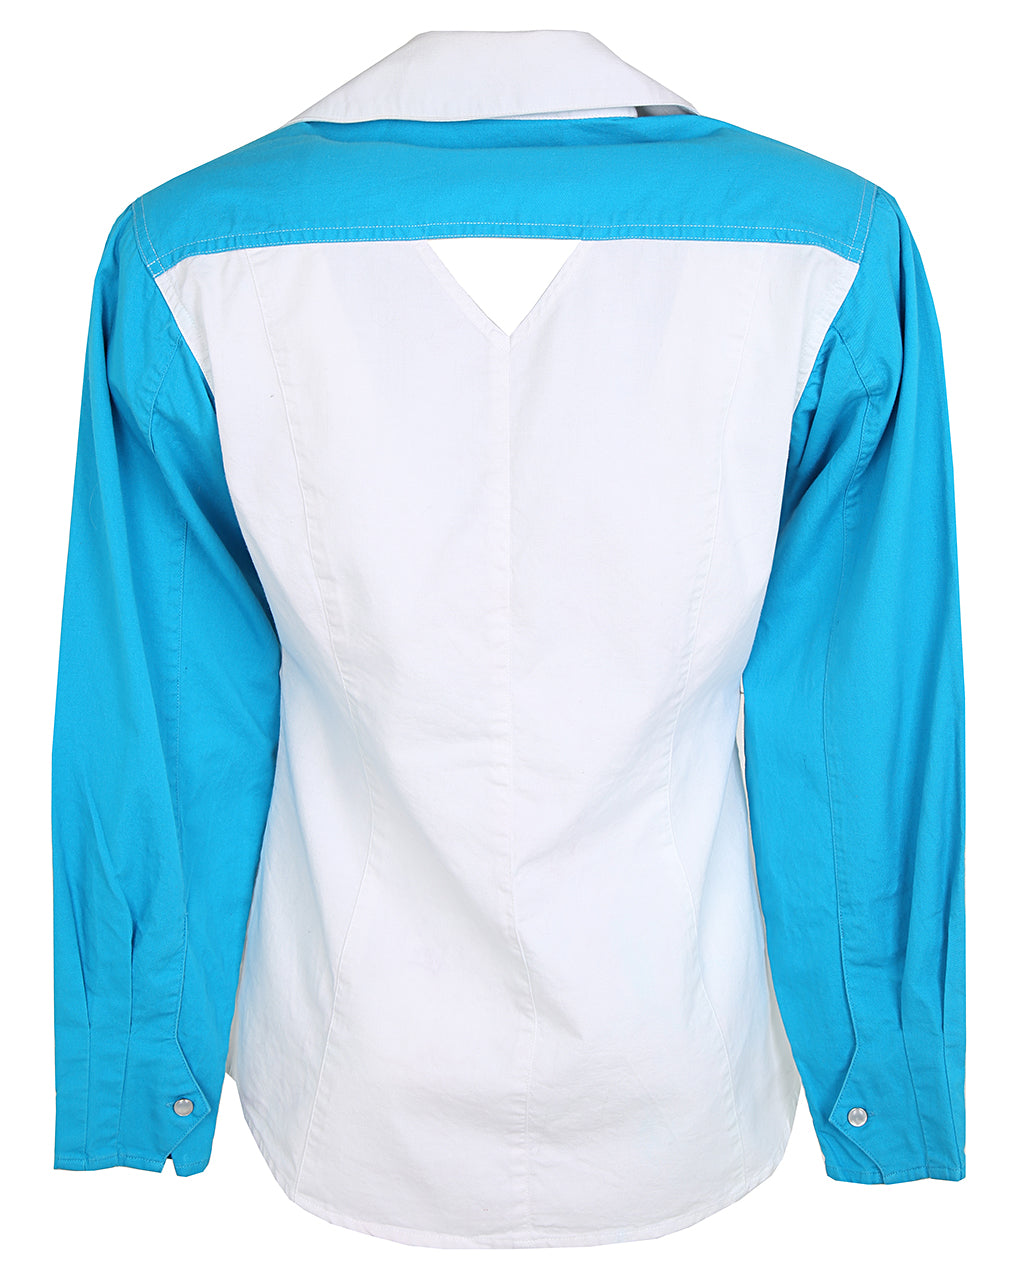 Wrangler Silver Lake Blue and White Ladies Western Shirt - M